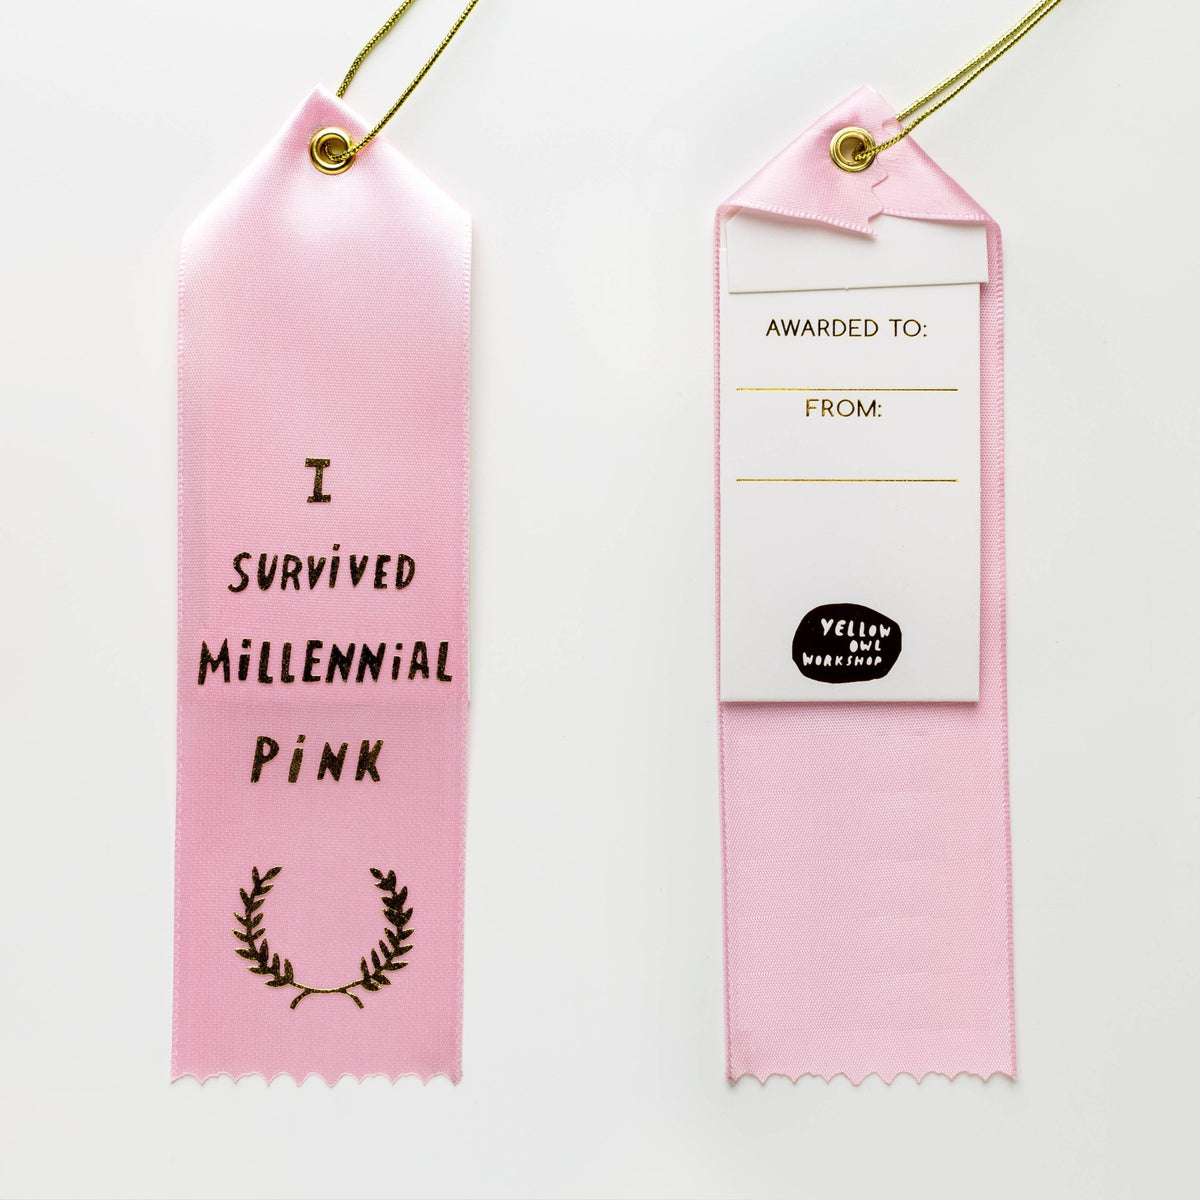 I Survived Millennial Pink - Award Ribbon Card - Yellow Owl Workshop